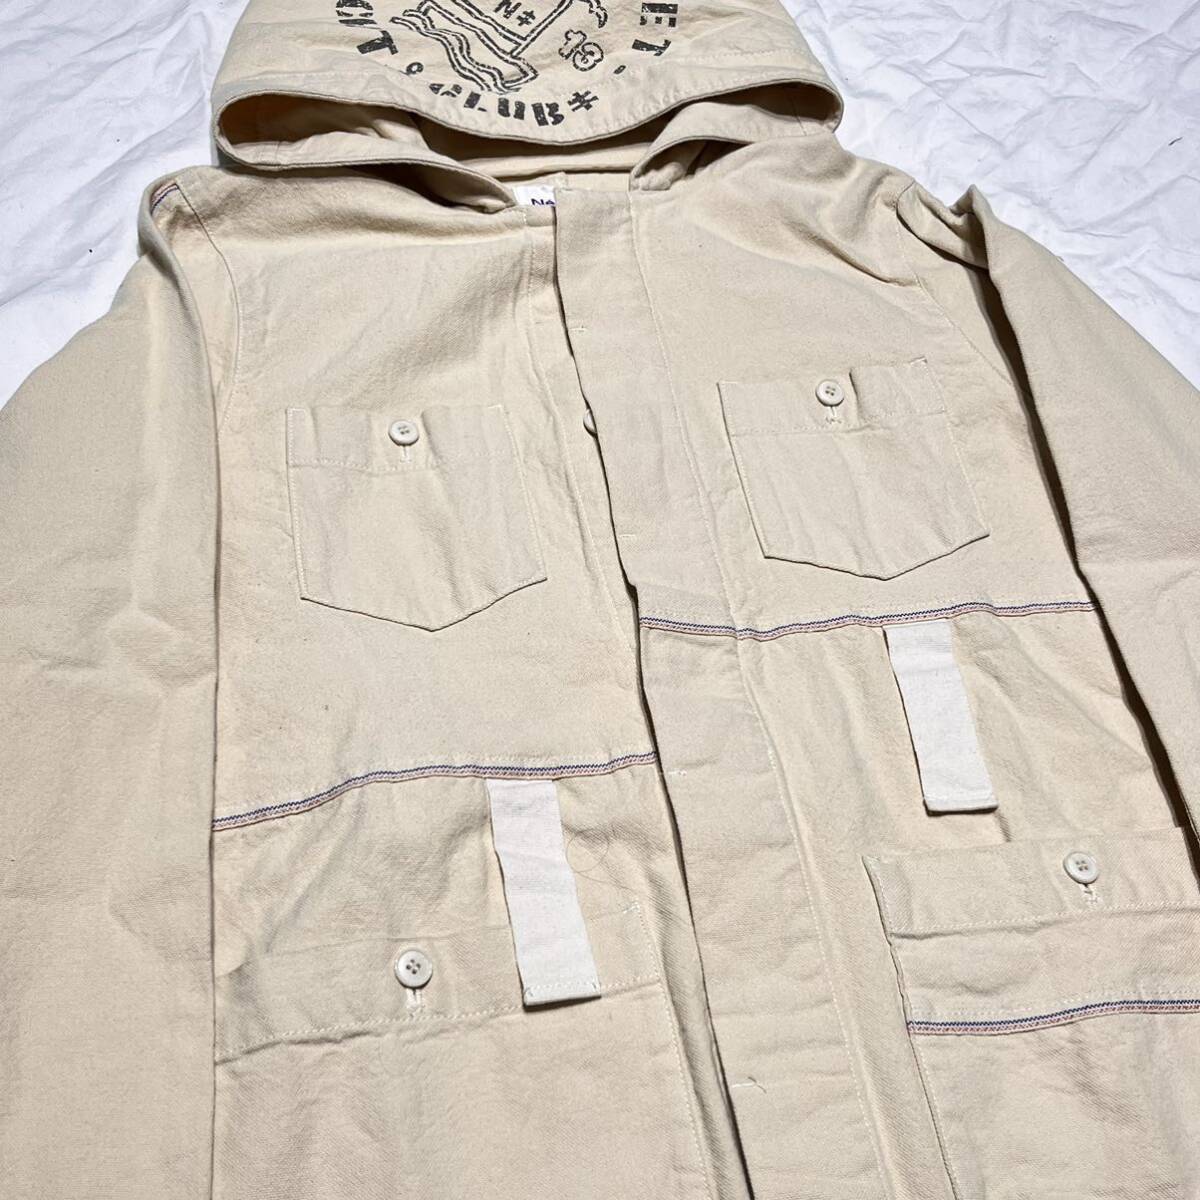 00's Ne-net design hood jacket hoodie rare japanese label archive goa ifsixwasnine kmrii share spirit lgb 14th addiction_画像3